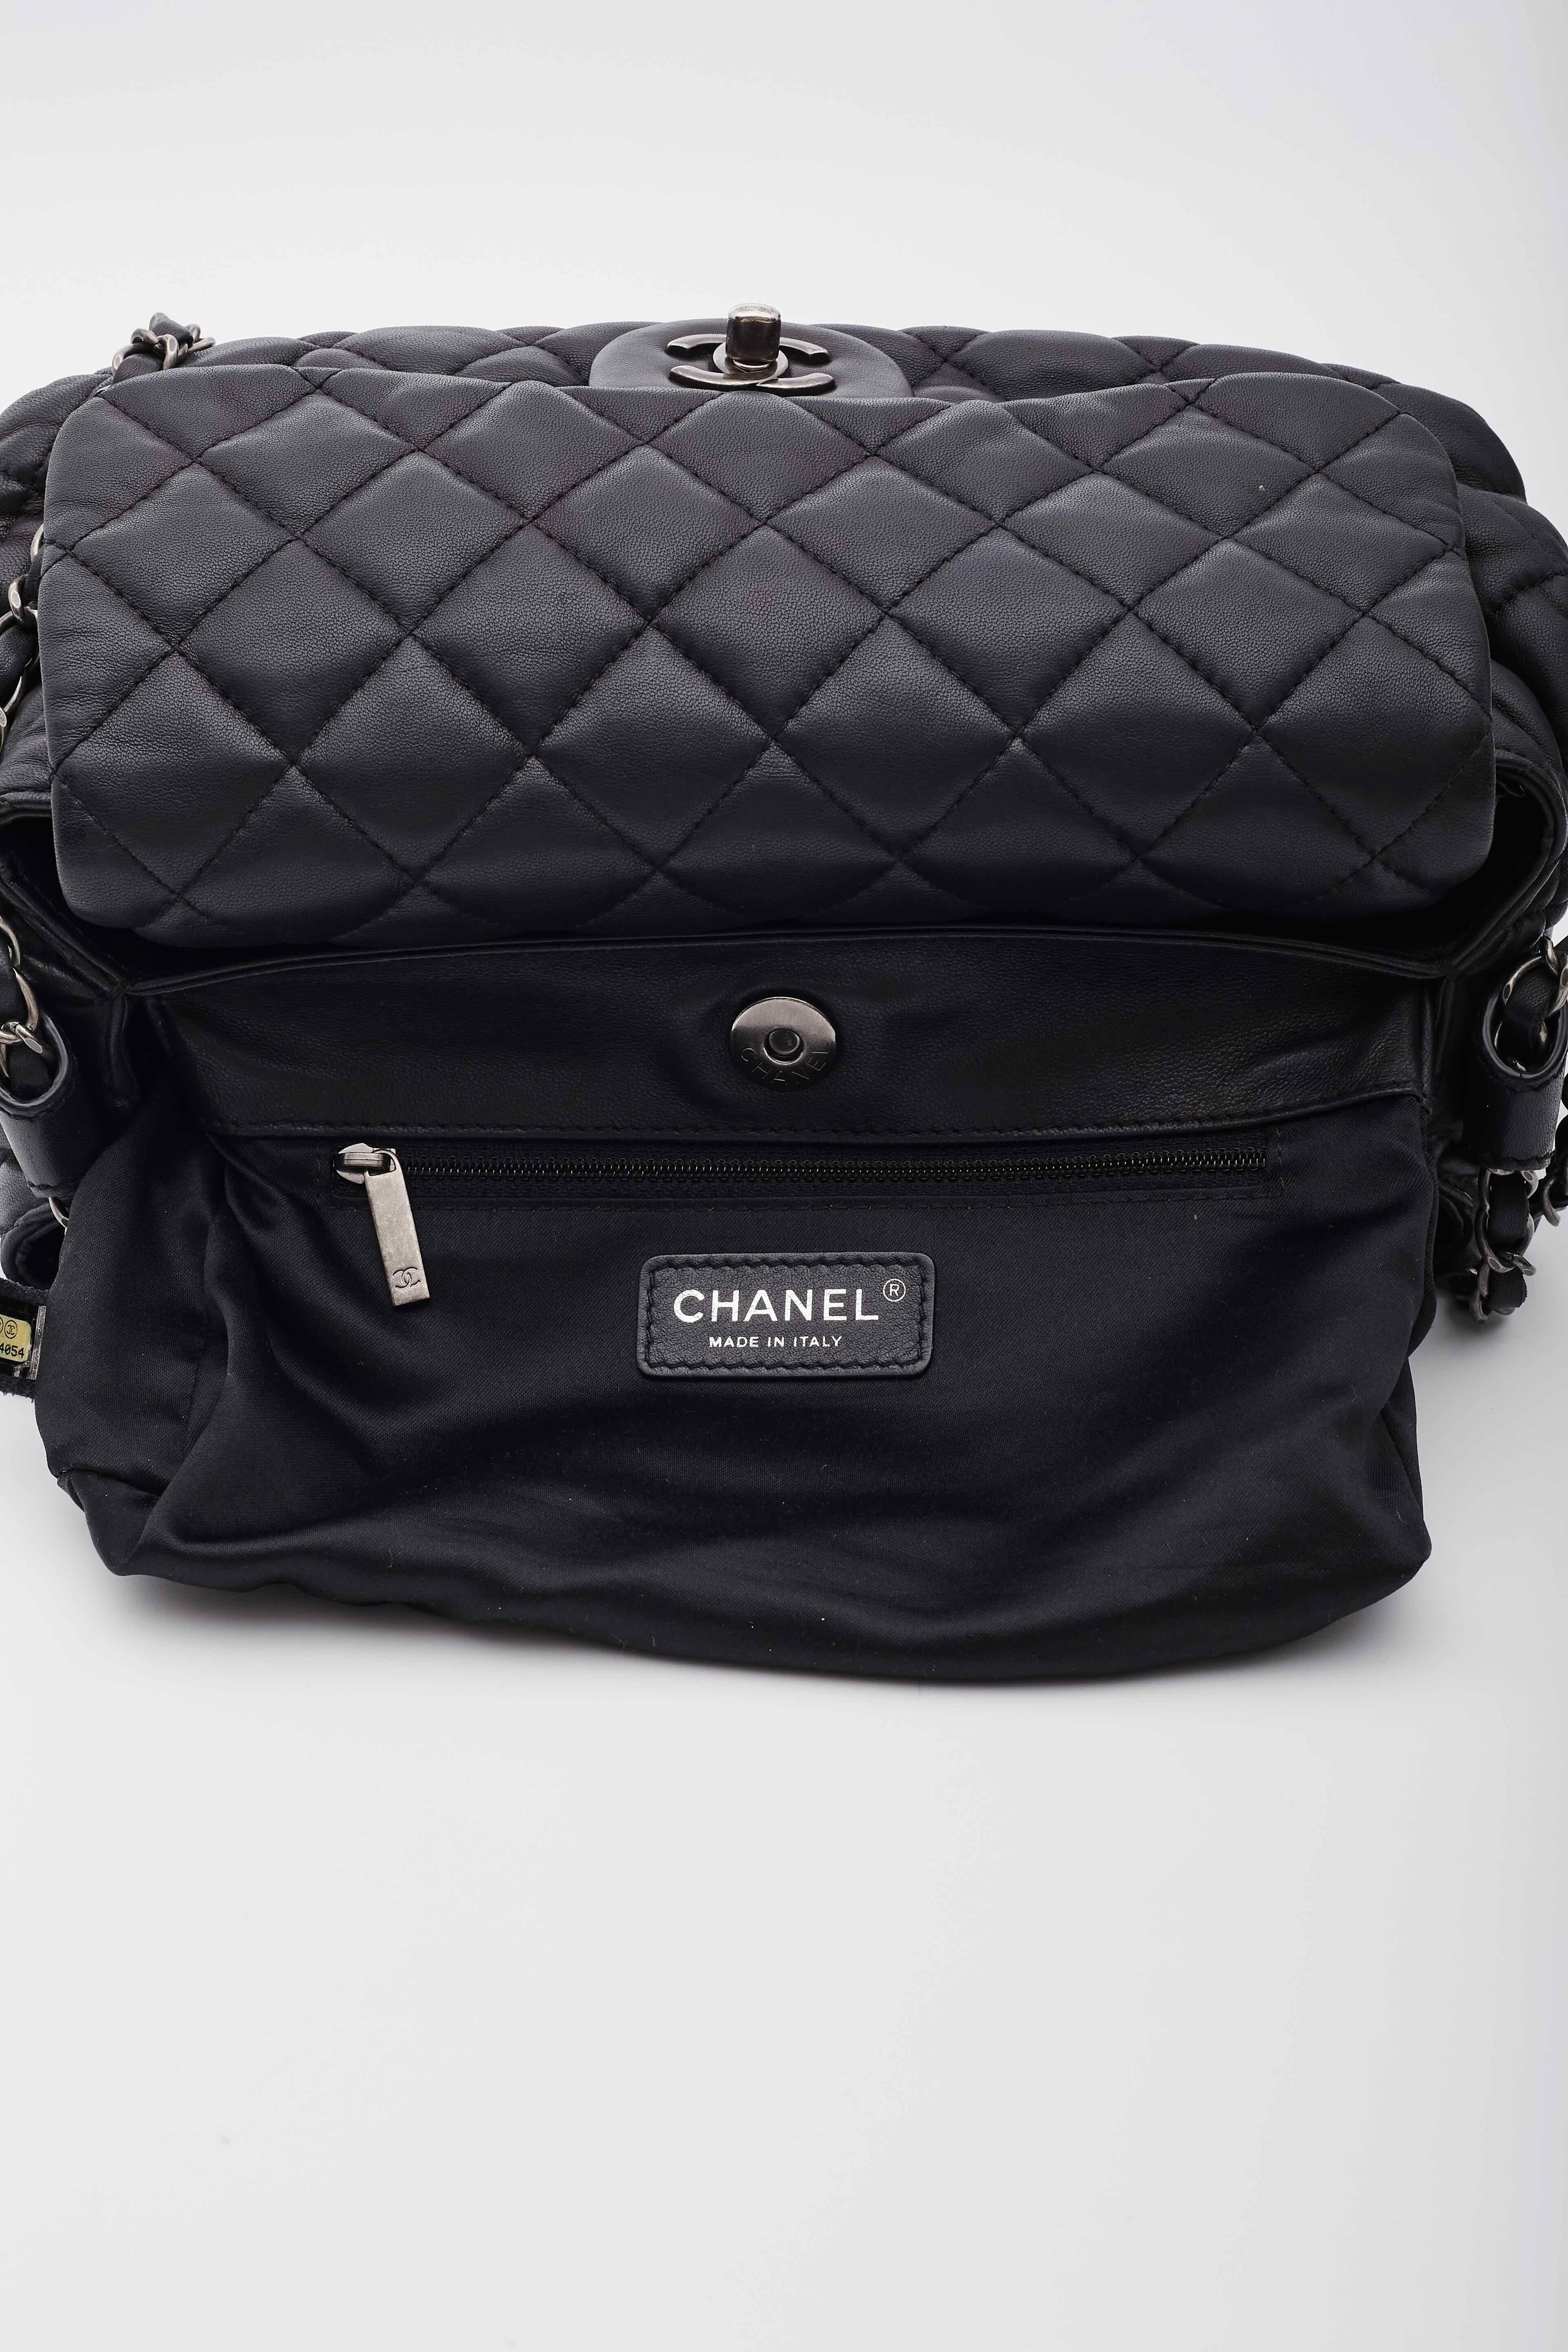 Chanel Black Lambskin Two Way Flap Shoulder Bag For Sale 3